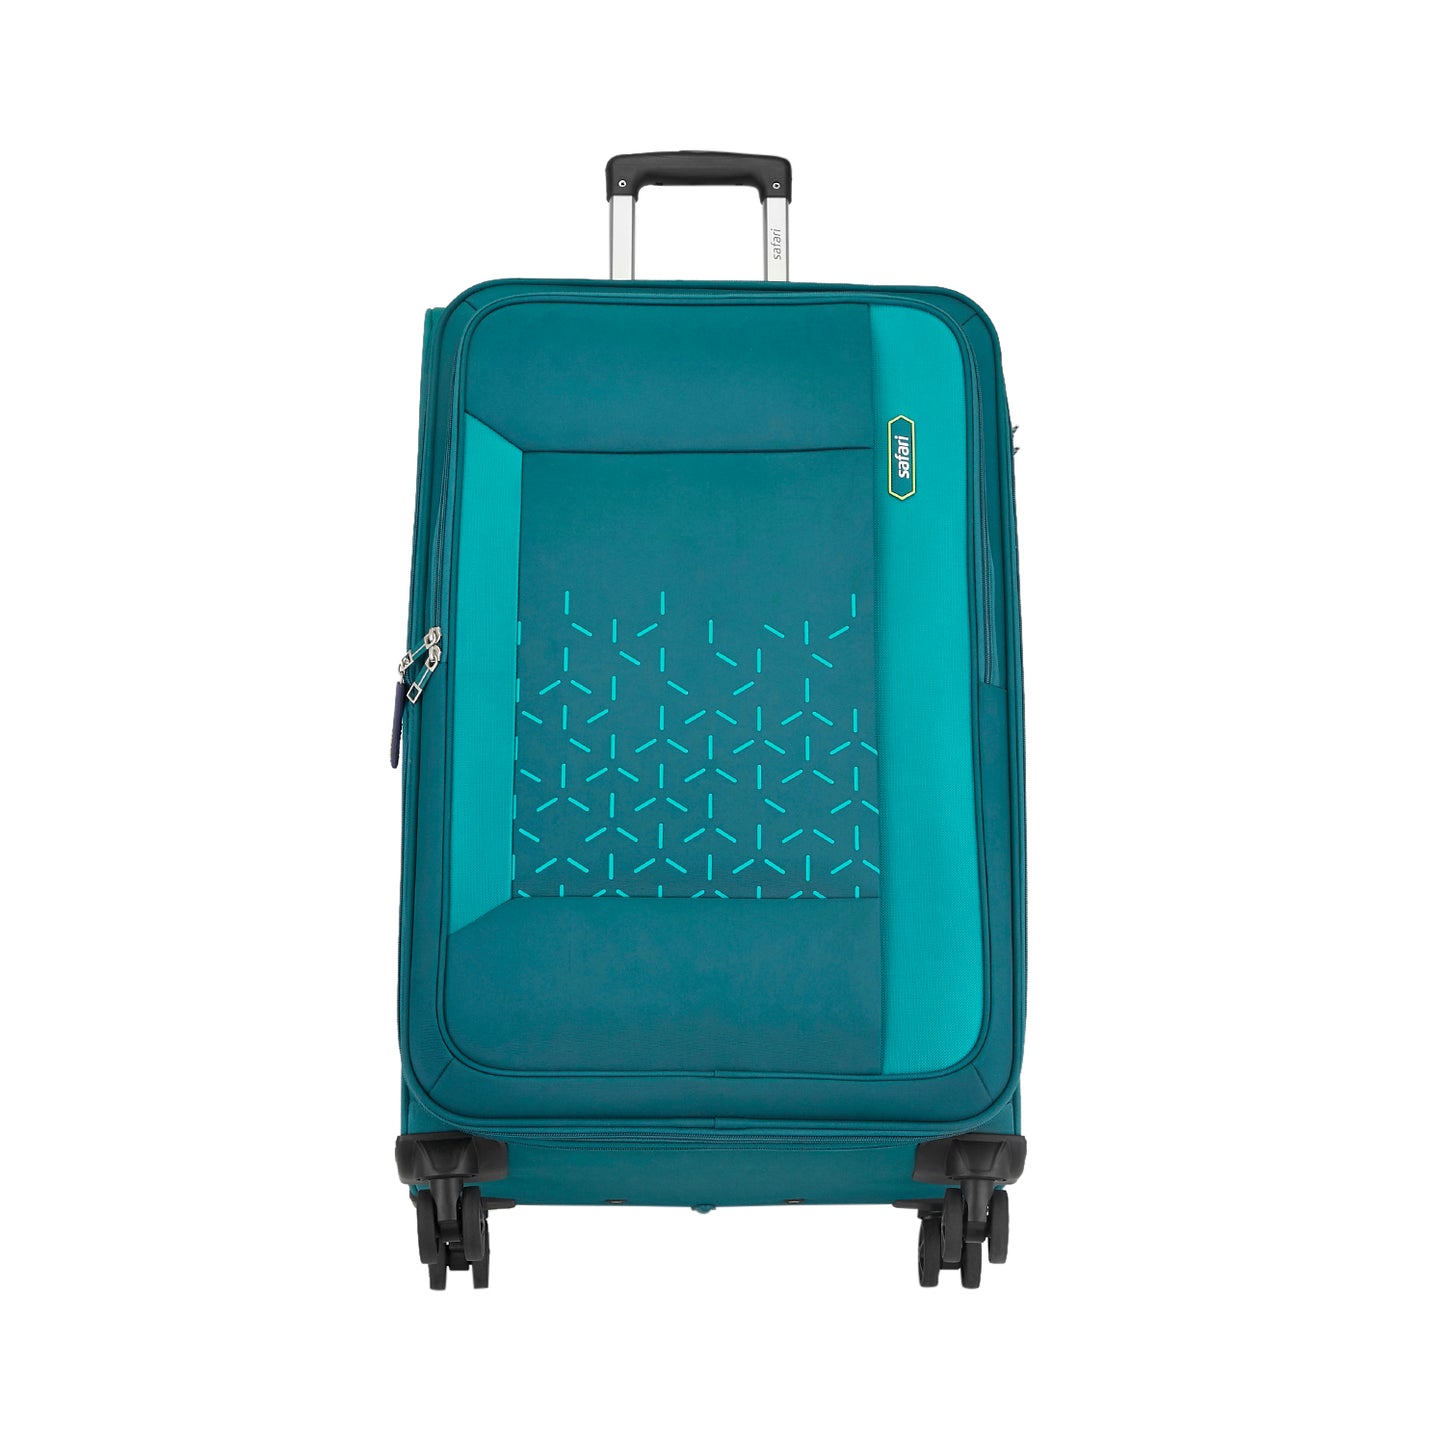 Safari Crystal Teal Trolley Bag with Dual Wheels